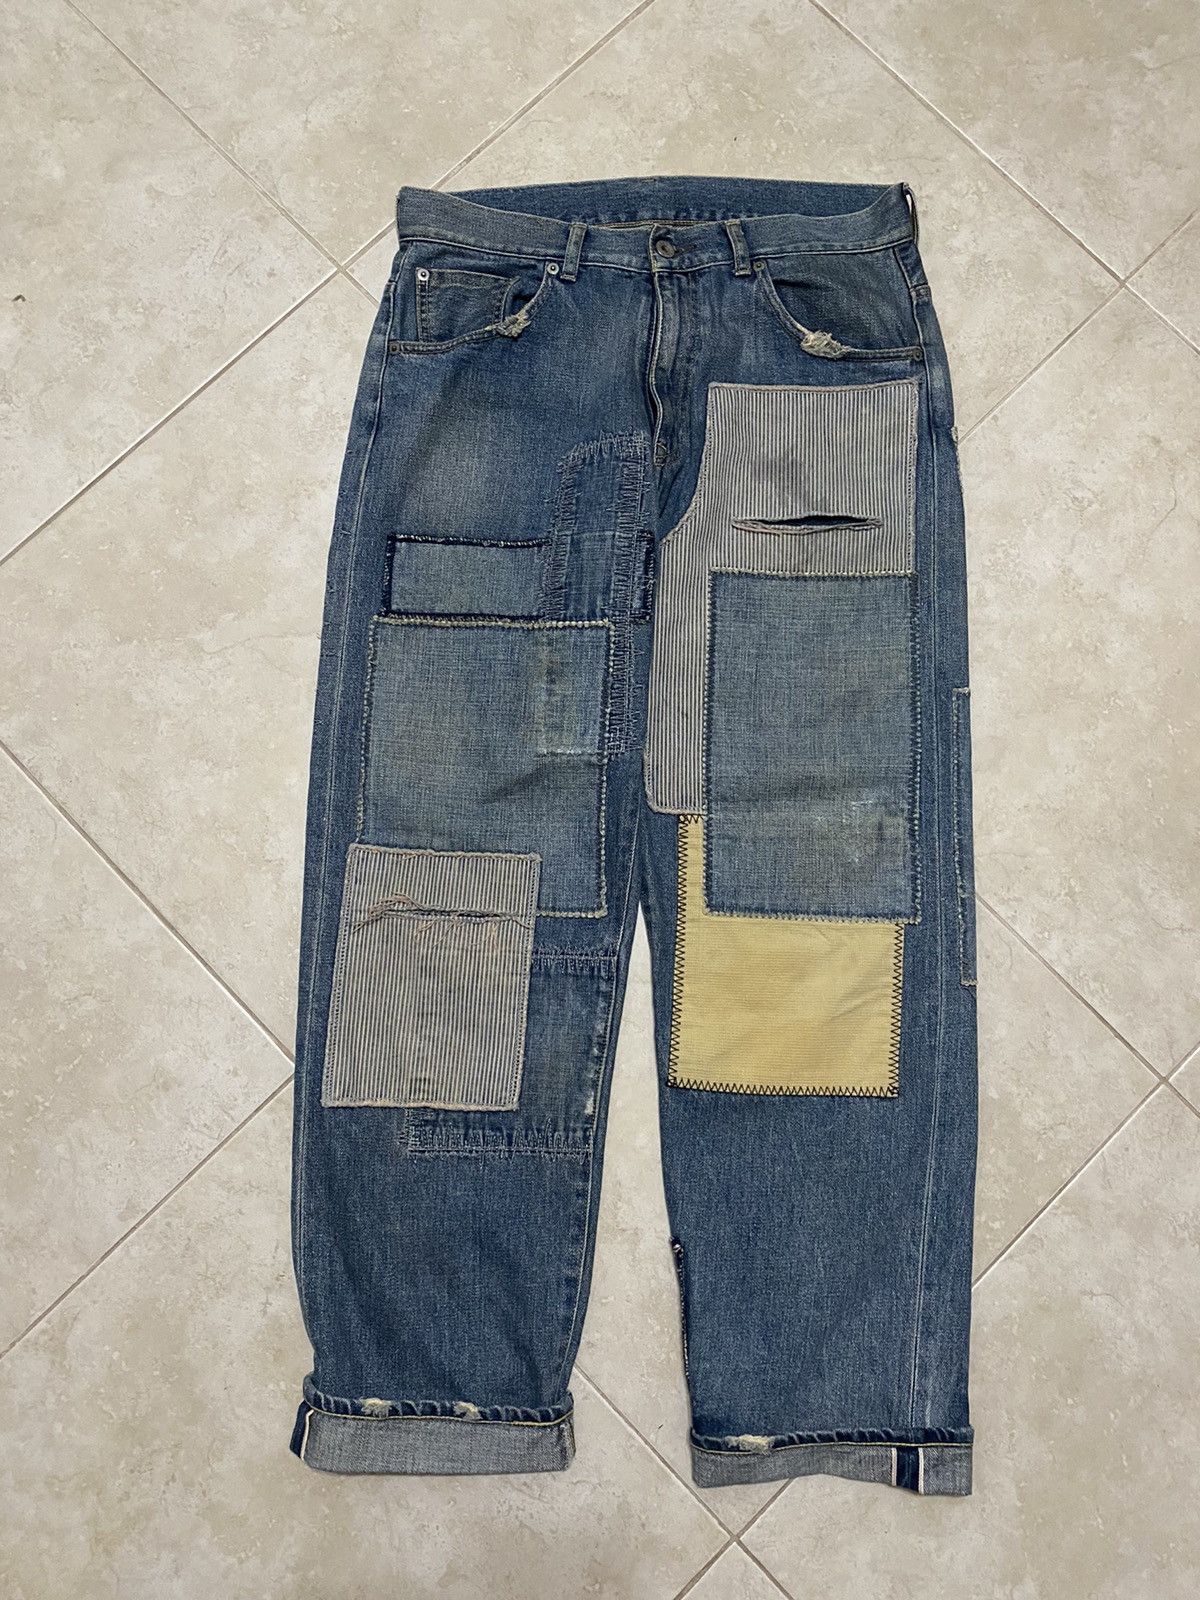 Whiz Limited Whiz Limited Patchwork Selvedge Denim Jeans | Grailed